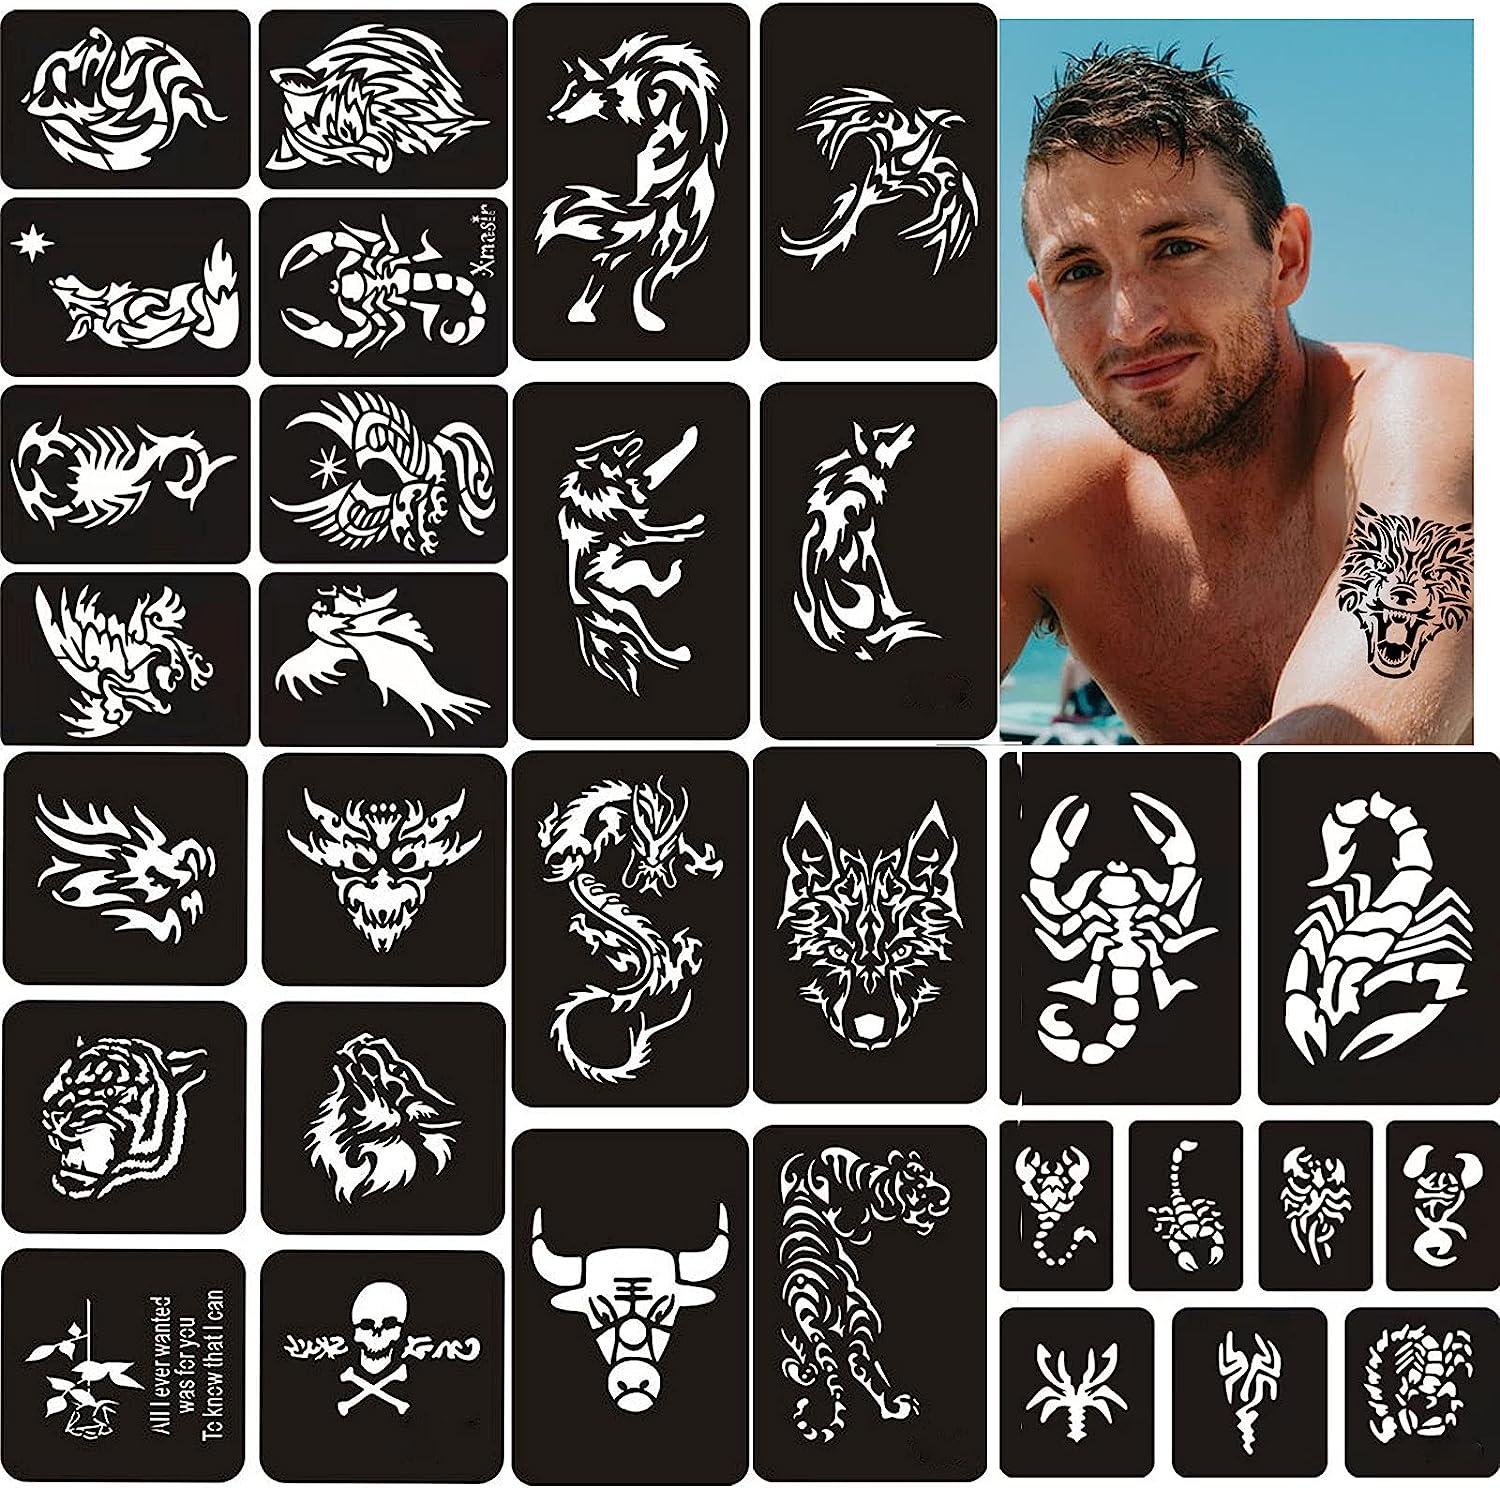 Easy henna tattoo 2020 || heart with a sword - step by step Mehndi design -  henna body art - YouTube